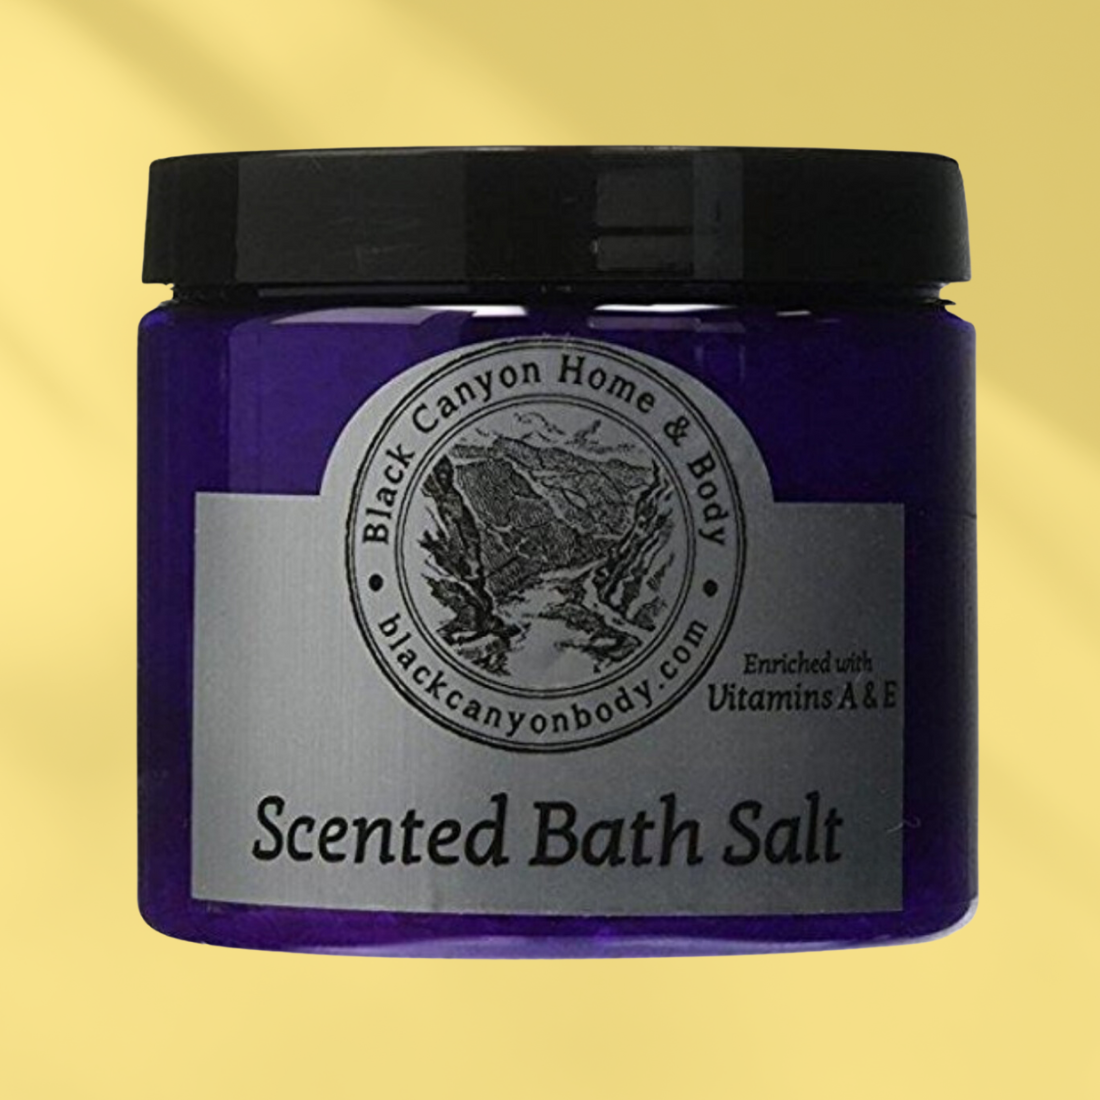 Black Canyon Bamboo & Citrus Scented Sea Salt Bath Soak